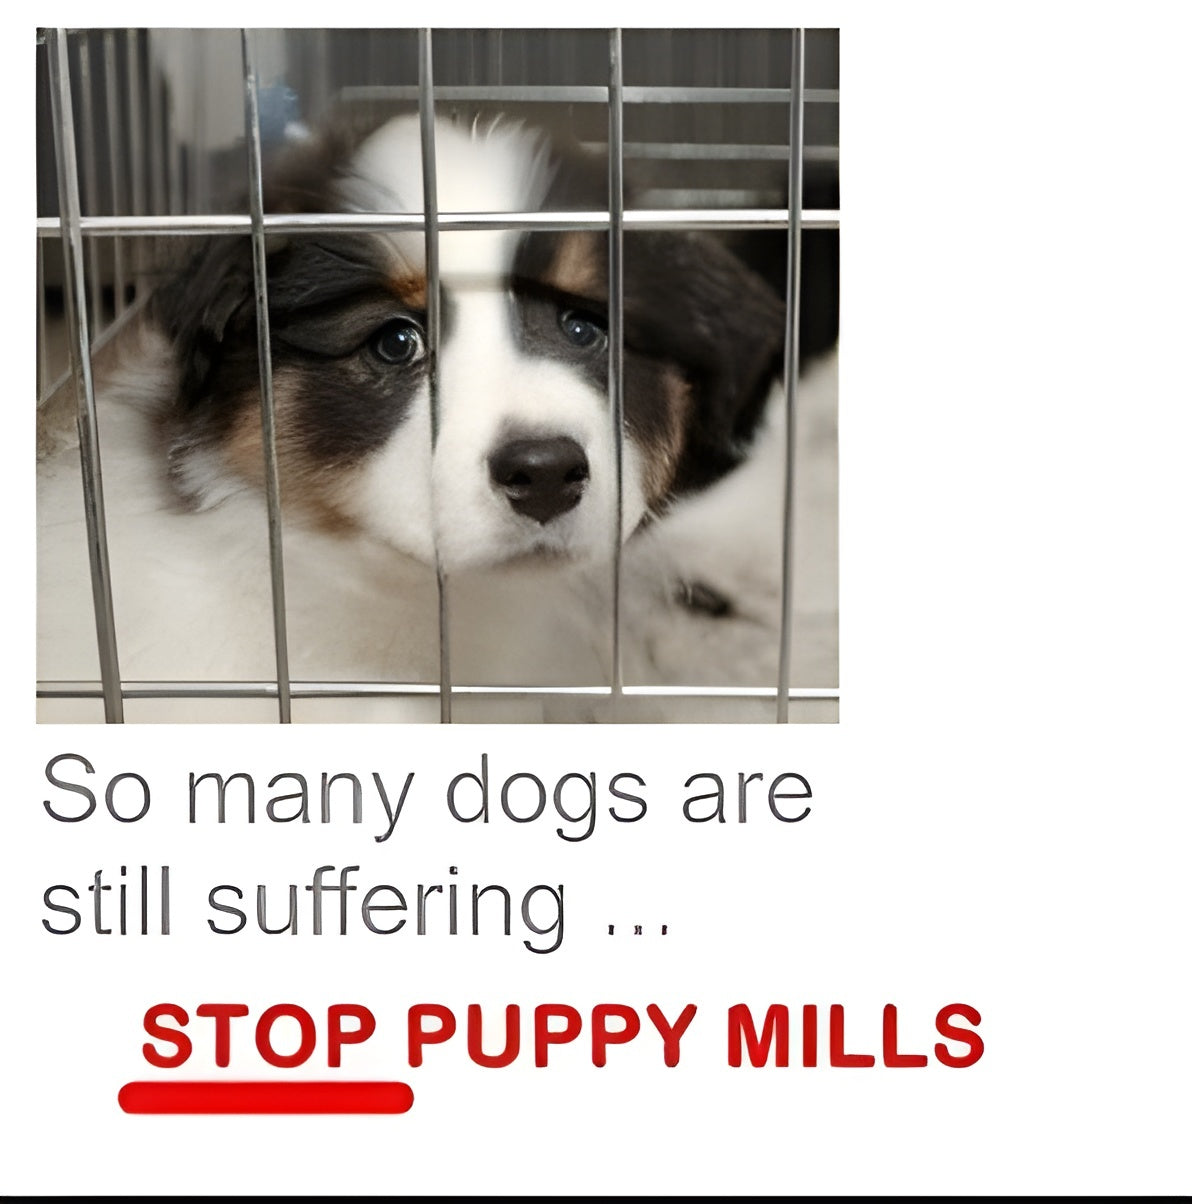 so many dog are still suffering. Stop puppy mills.